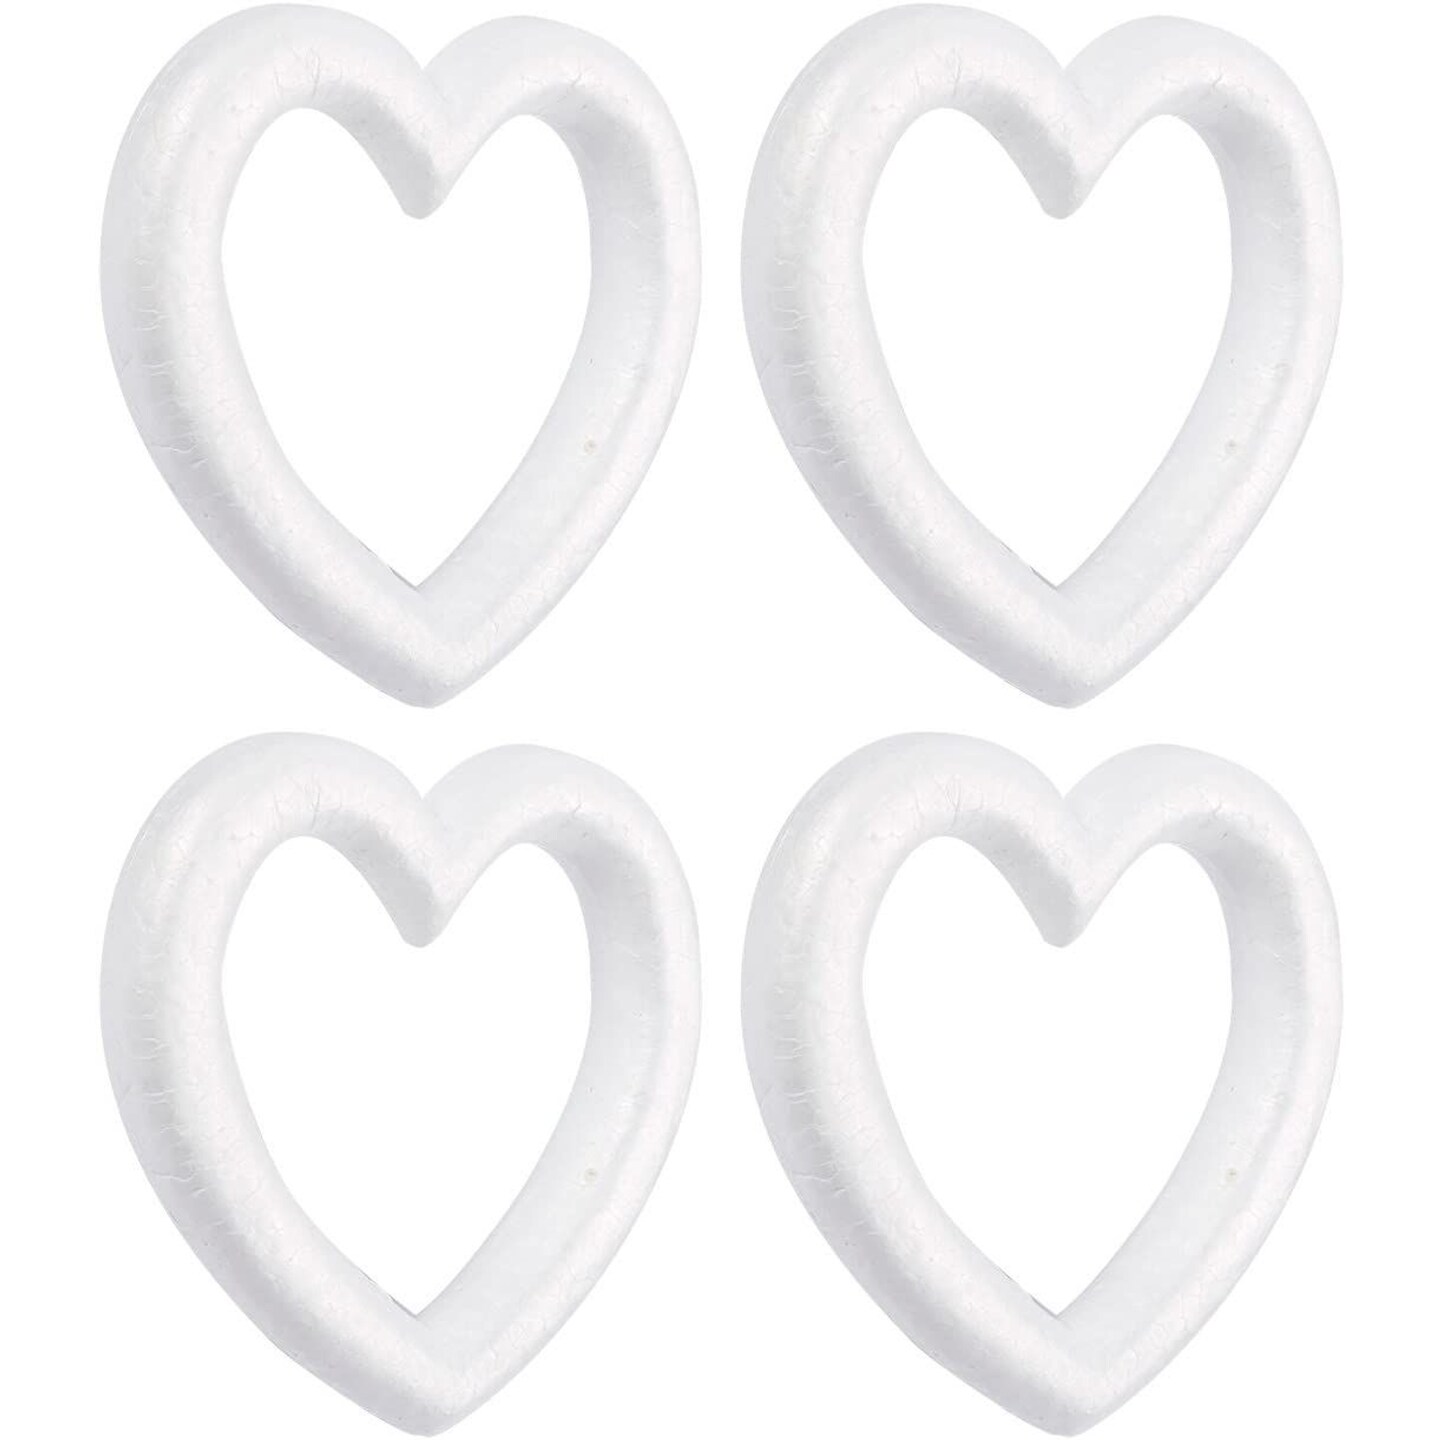 Handmade Wood Heart-Shaped Ornaments (Set of 4) - Simple Hearts